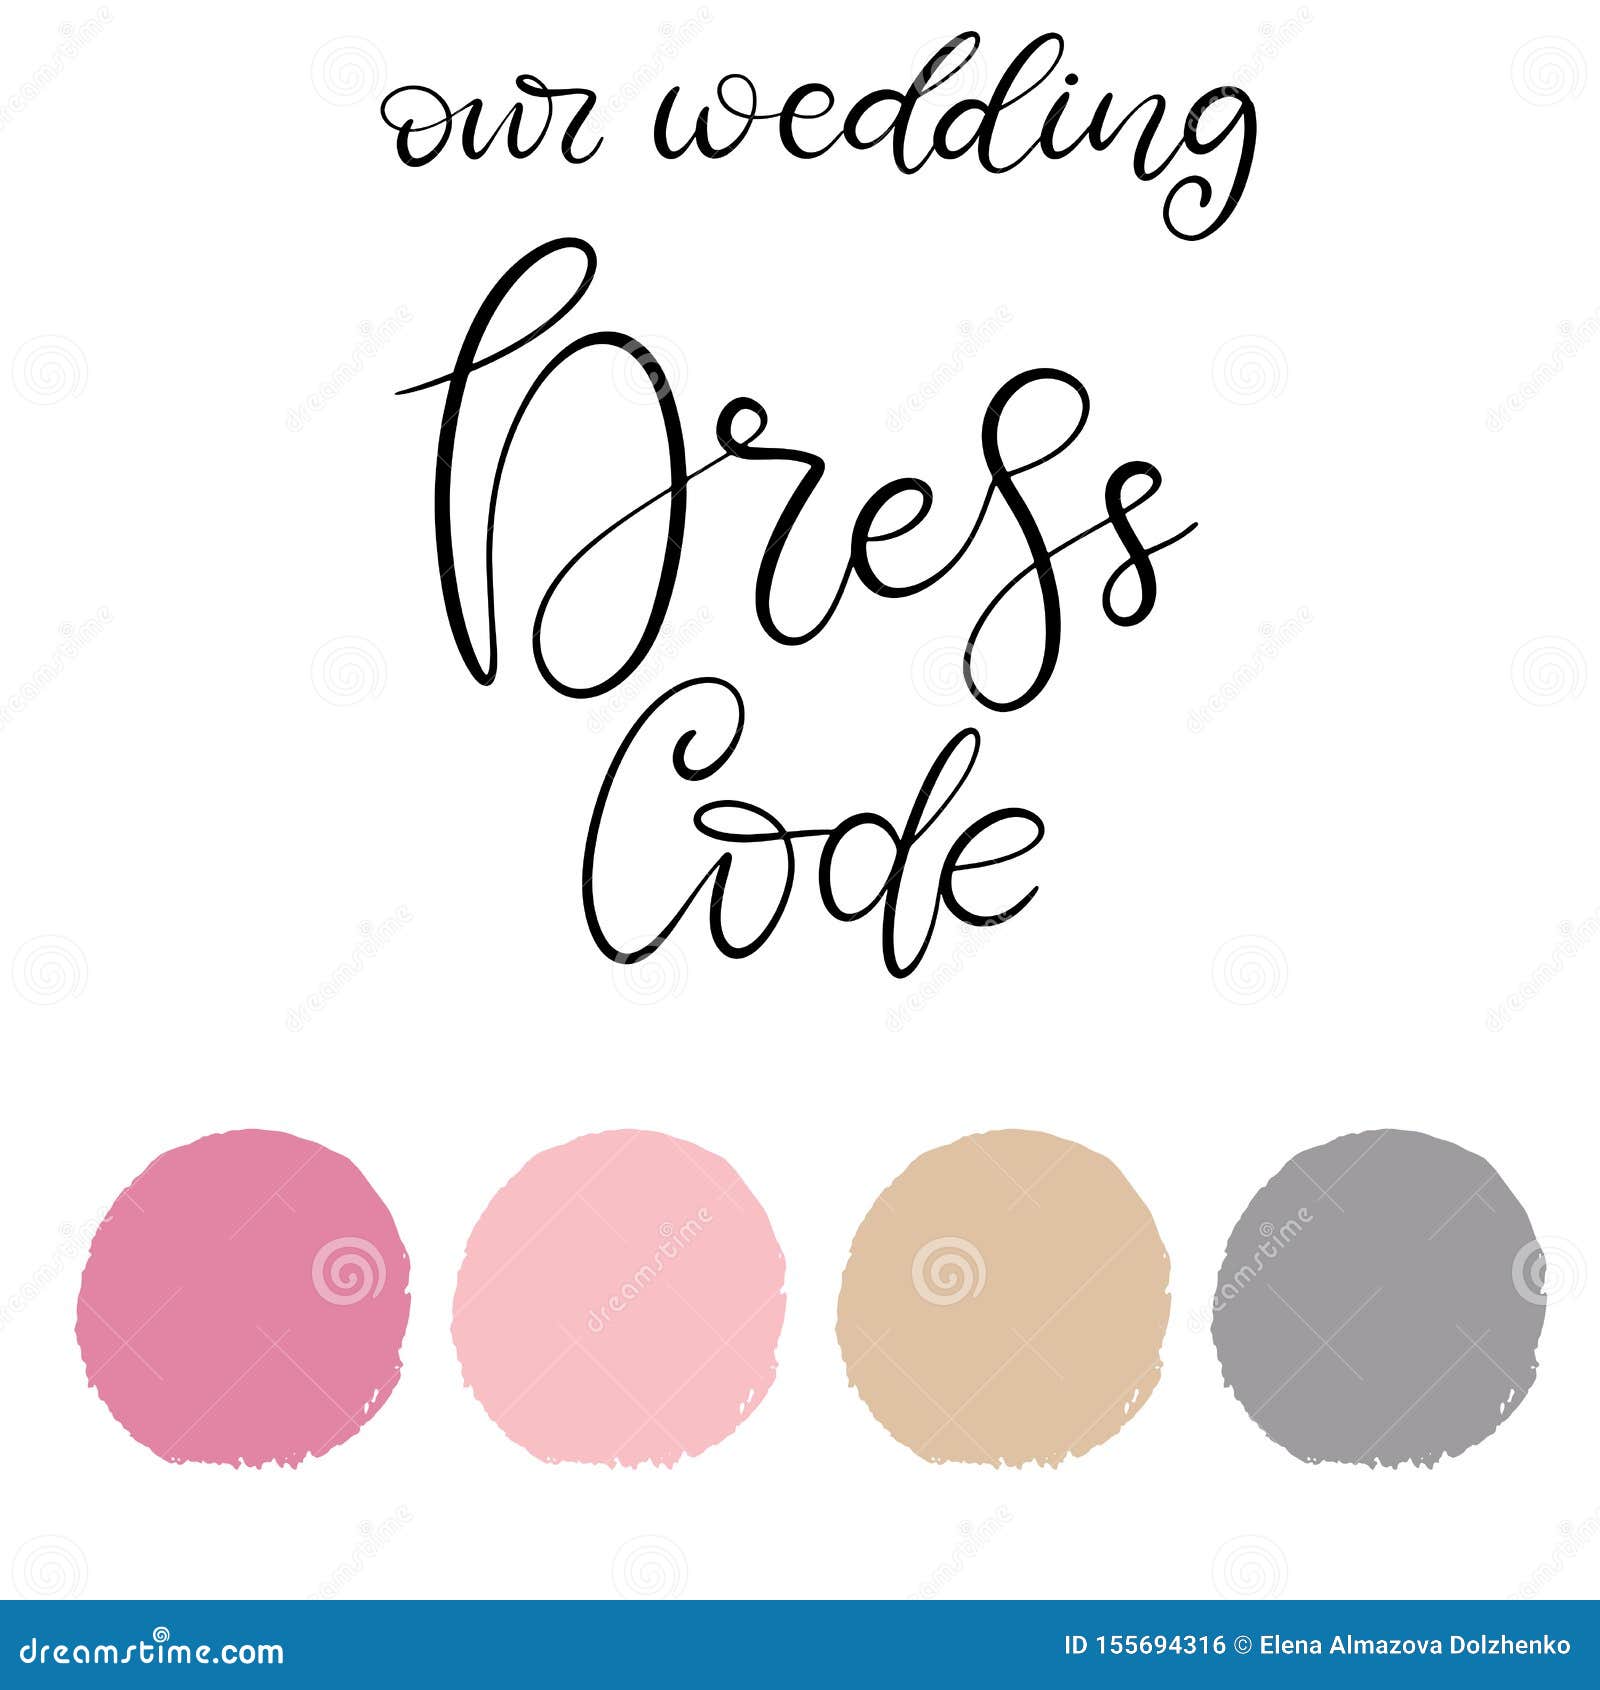 Top 144+ dress code wedding invitation best - seven.edu.vn